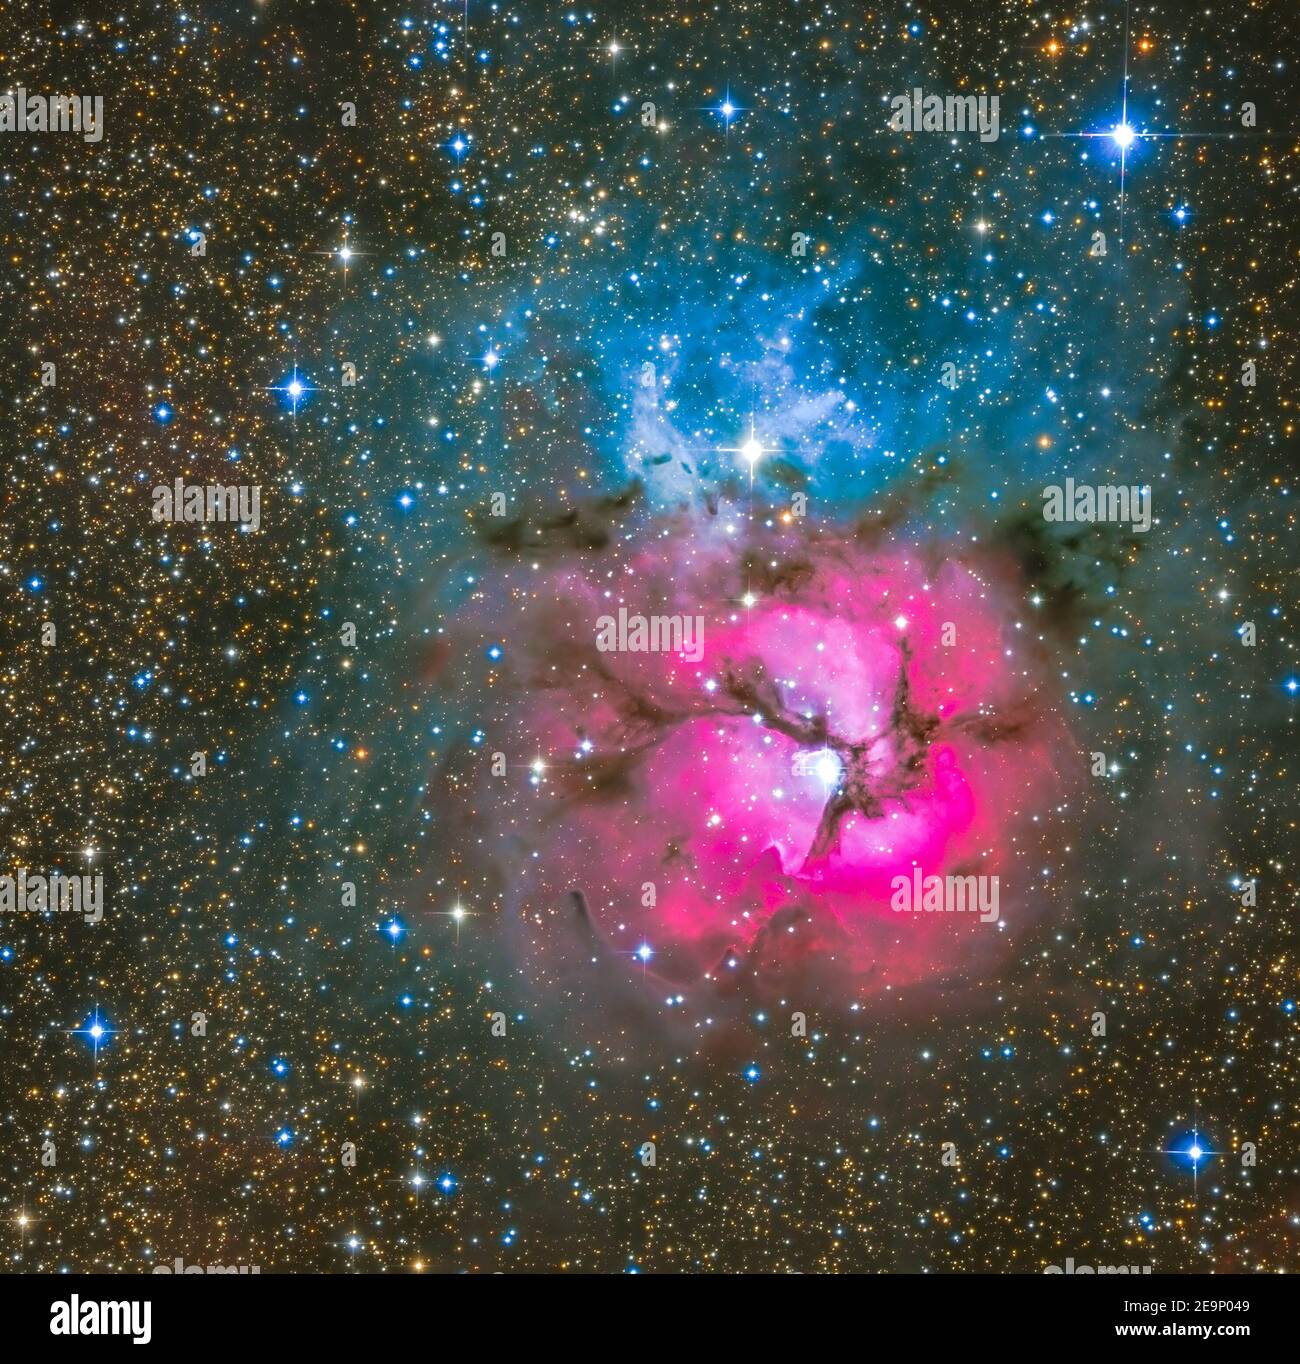 m20 trifid nebula from earth